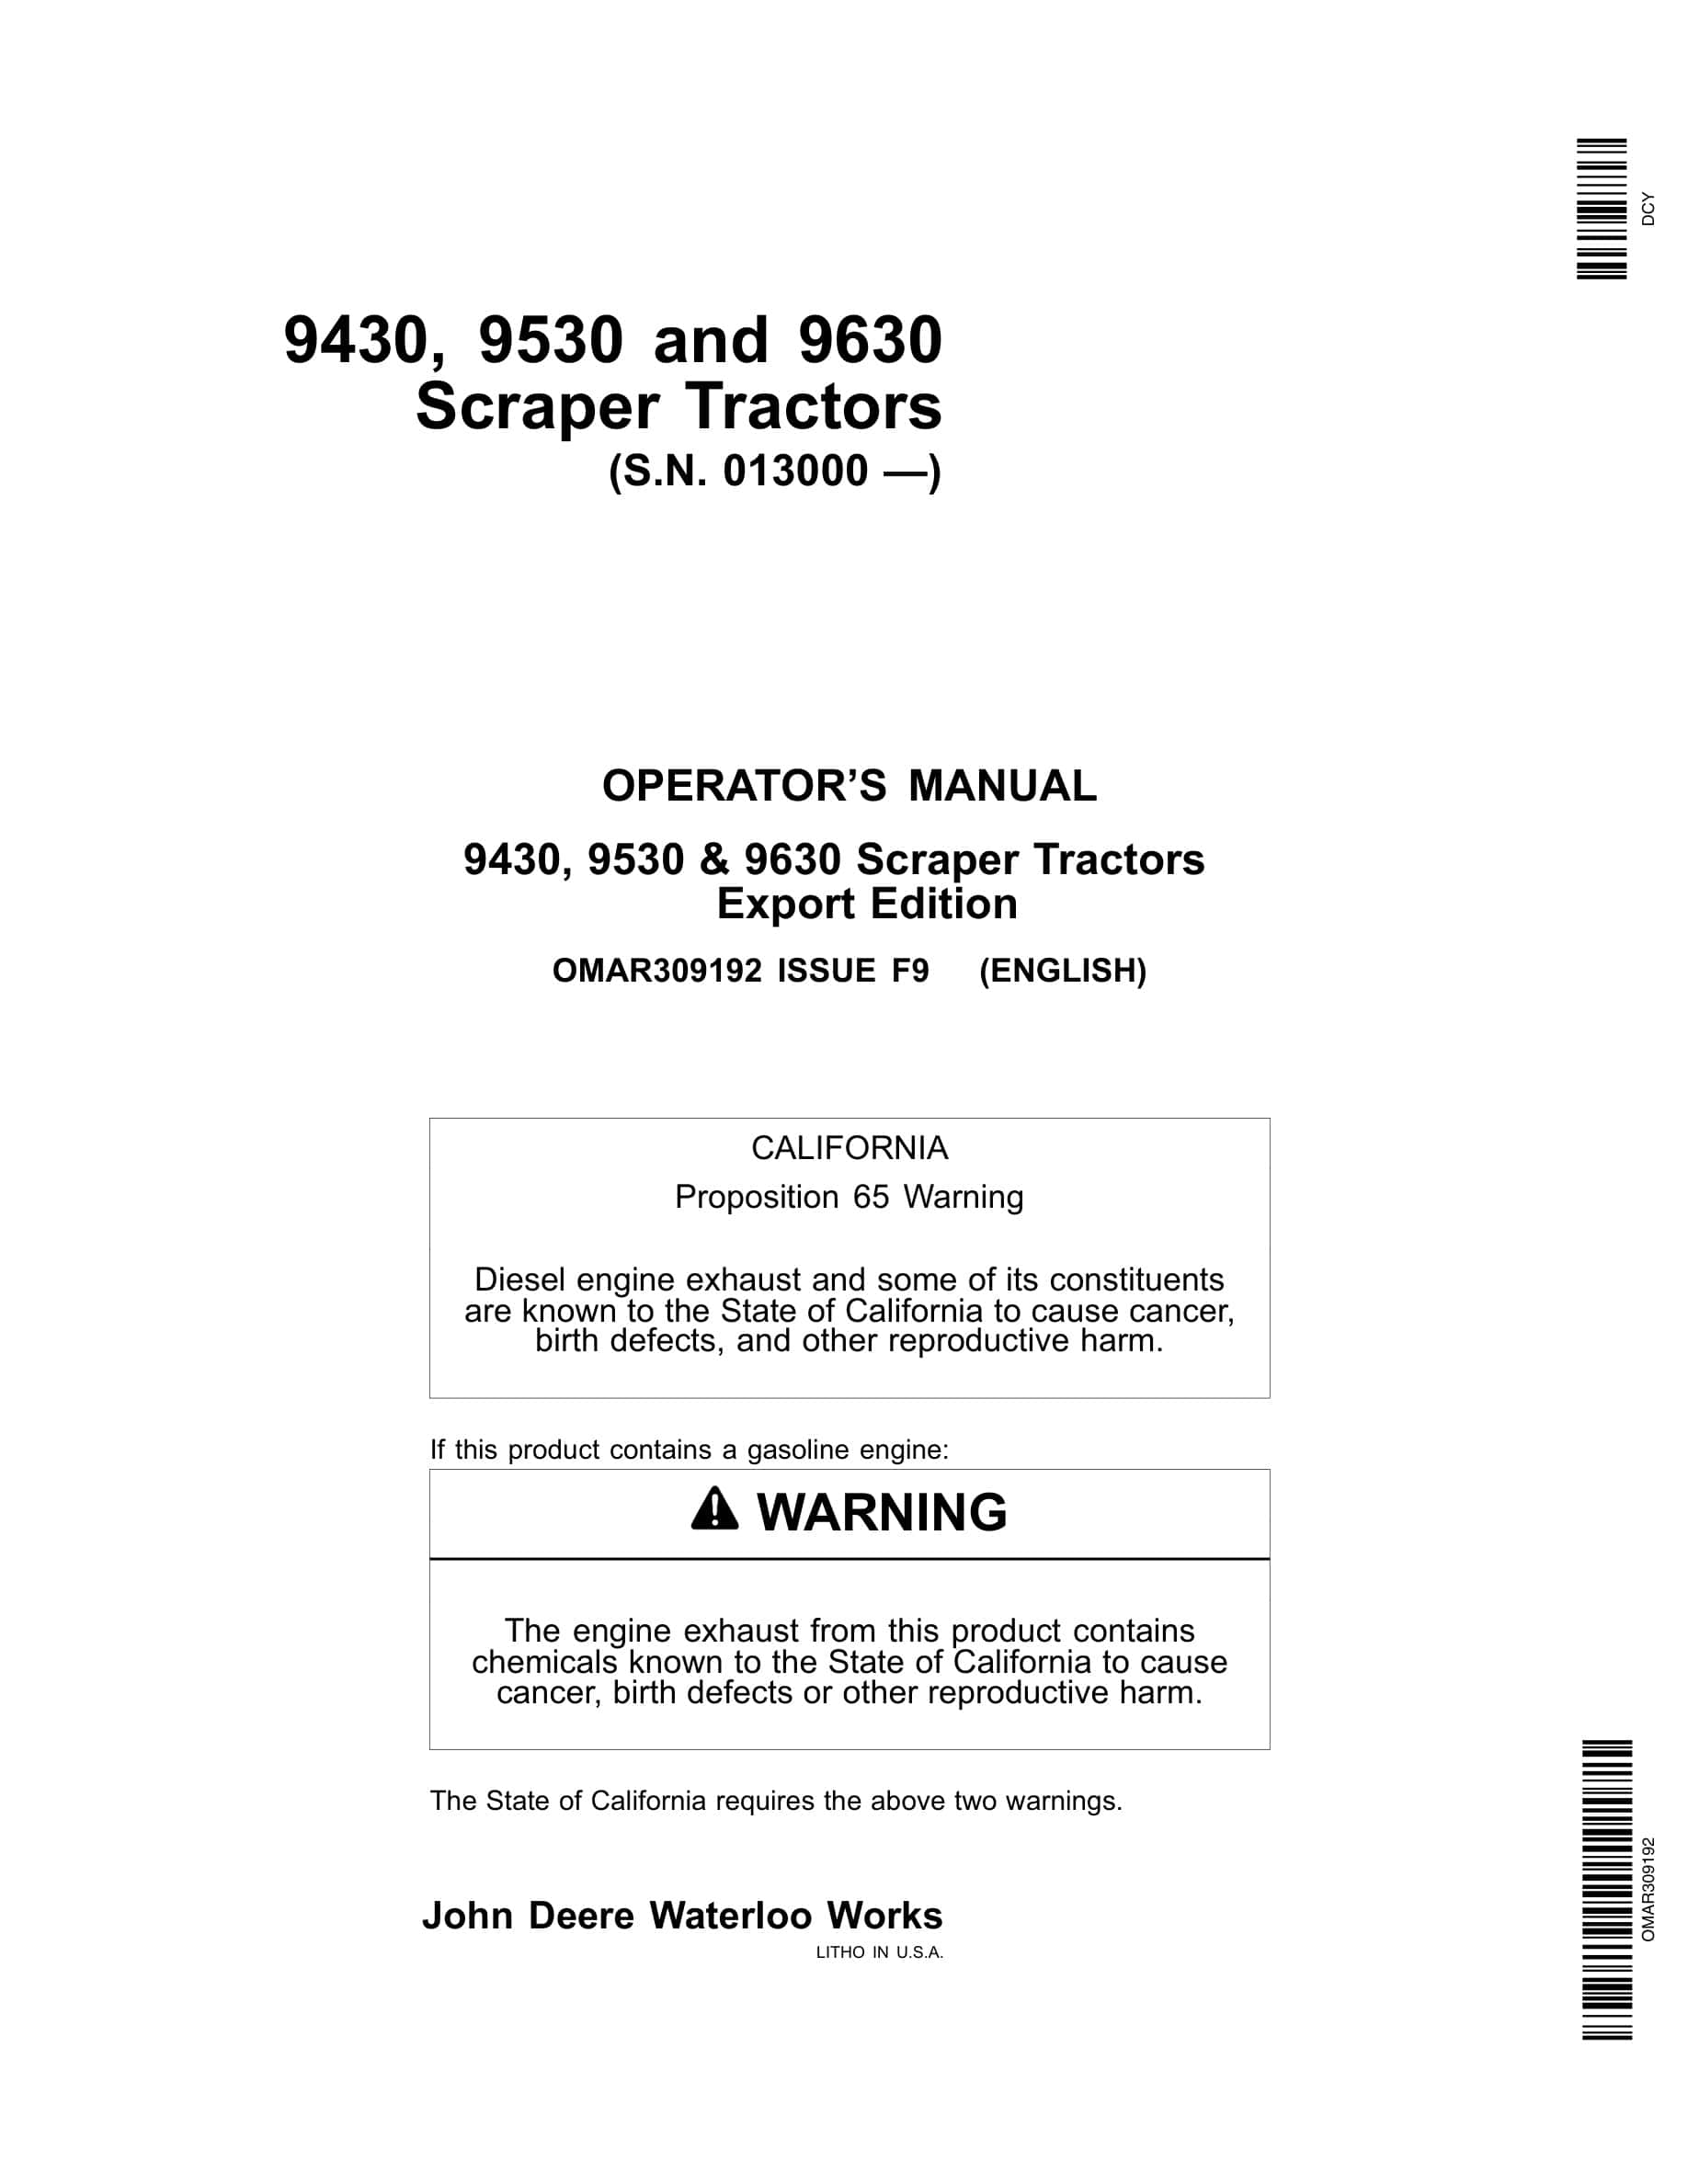 John Deere 9430 9530 9630 Scraper Tractors Operator Manuals OMAR309192-1